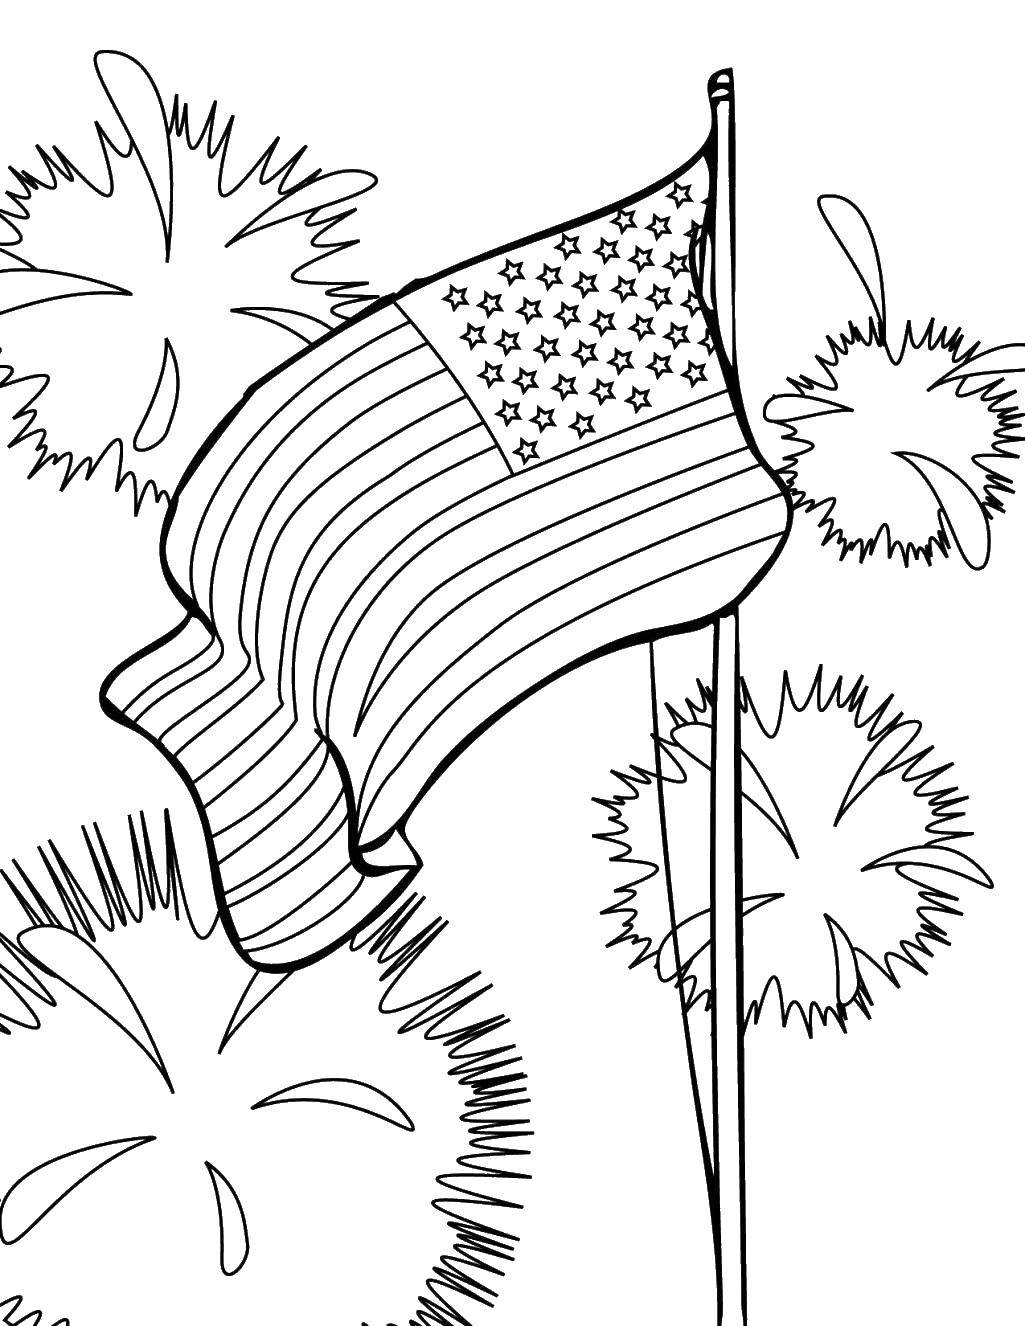 Название: Раскраска Флаг сша, салют. Категория: США. Теги: сша, праздник, 4 июля, флаг.